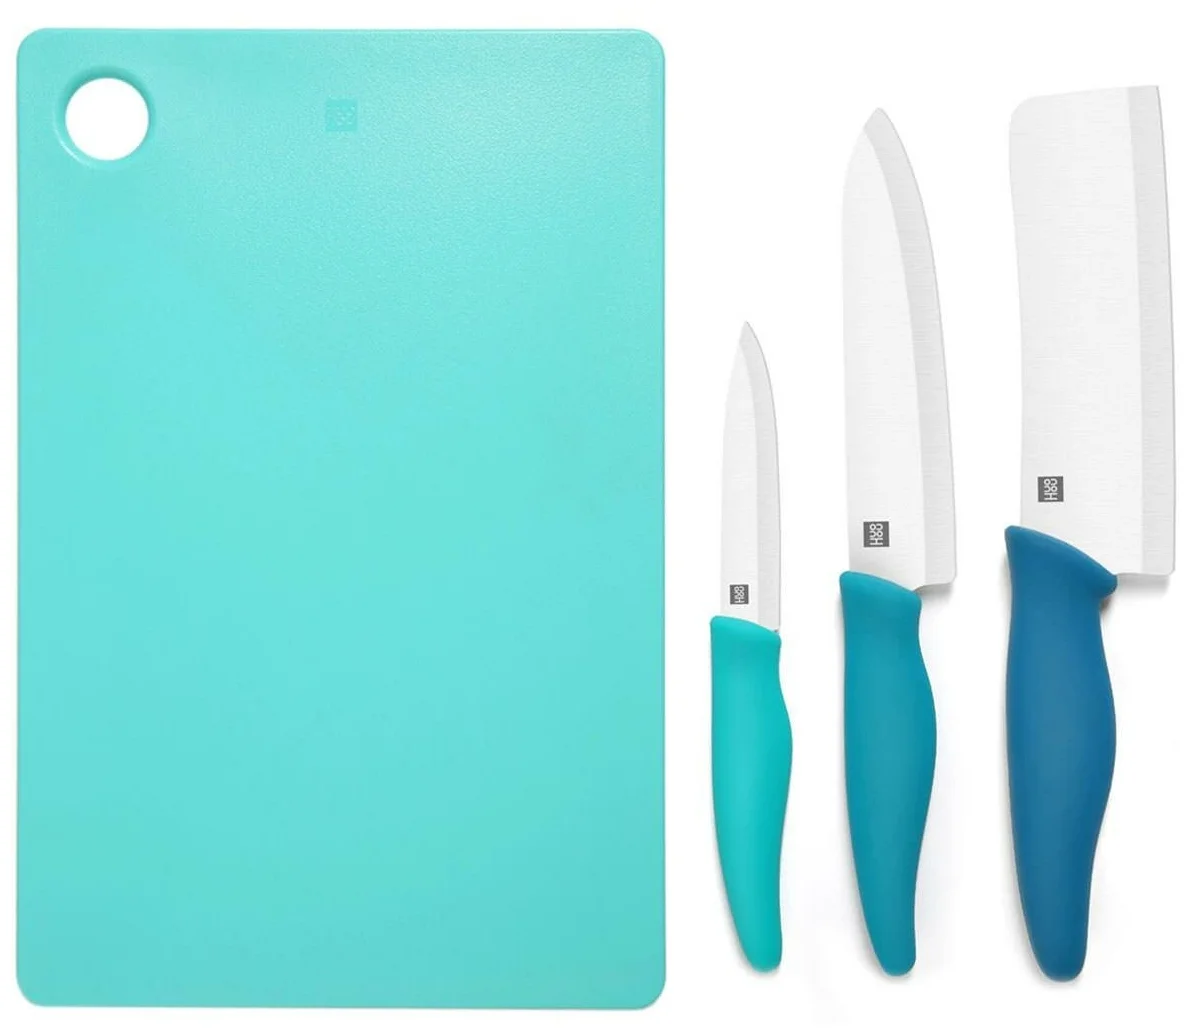 Xiaomi Hot ceramic HU0020, 3 ножа и доска - материал лезвия: керамика